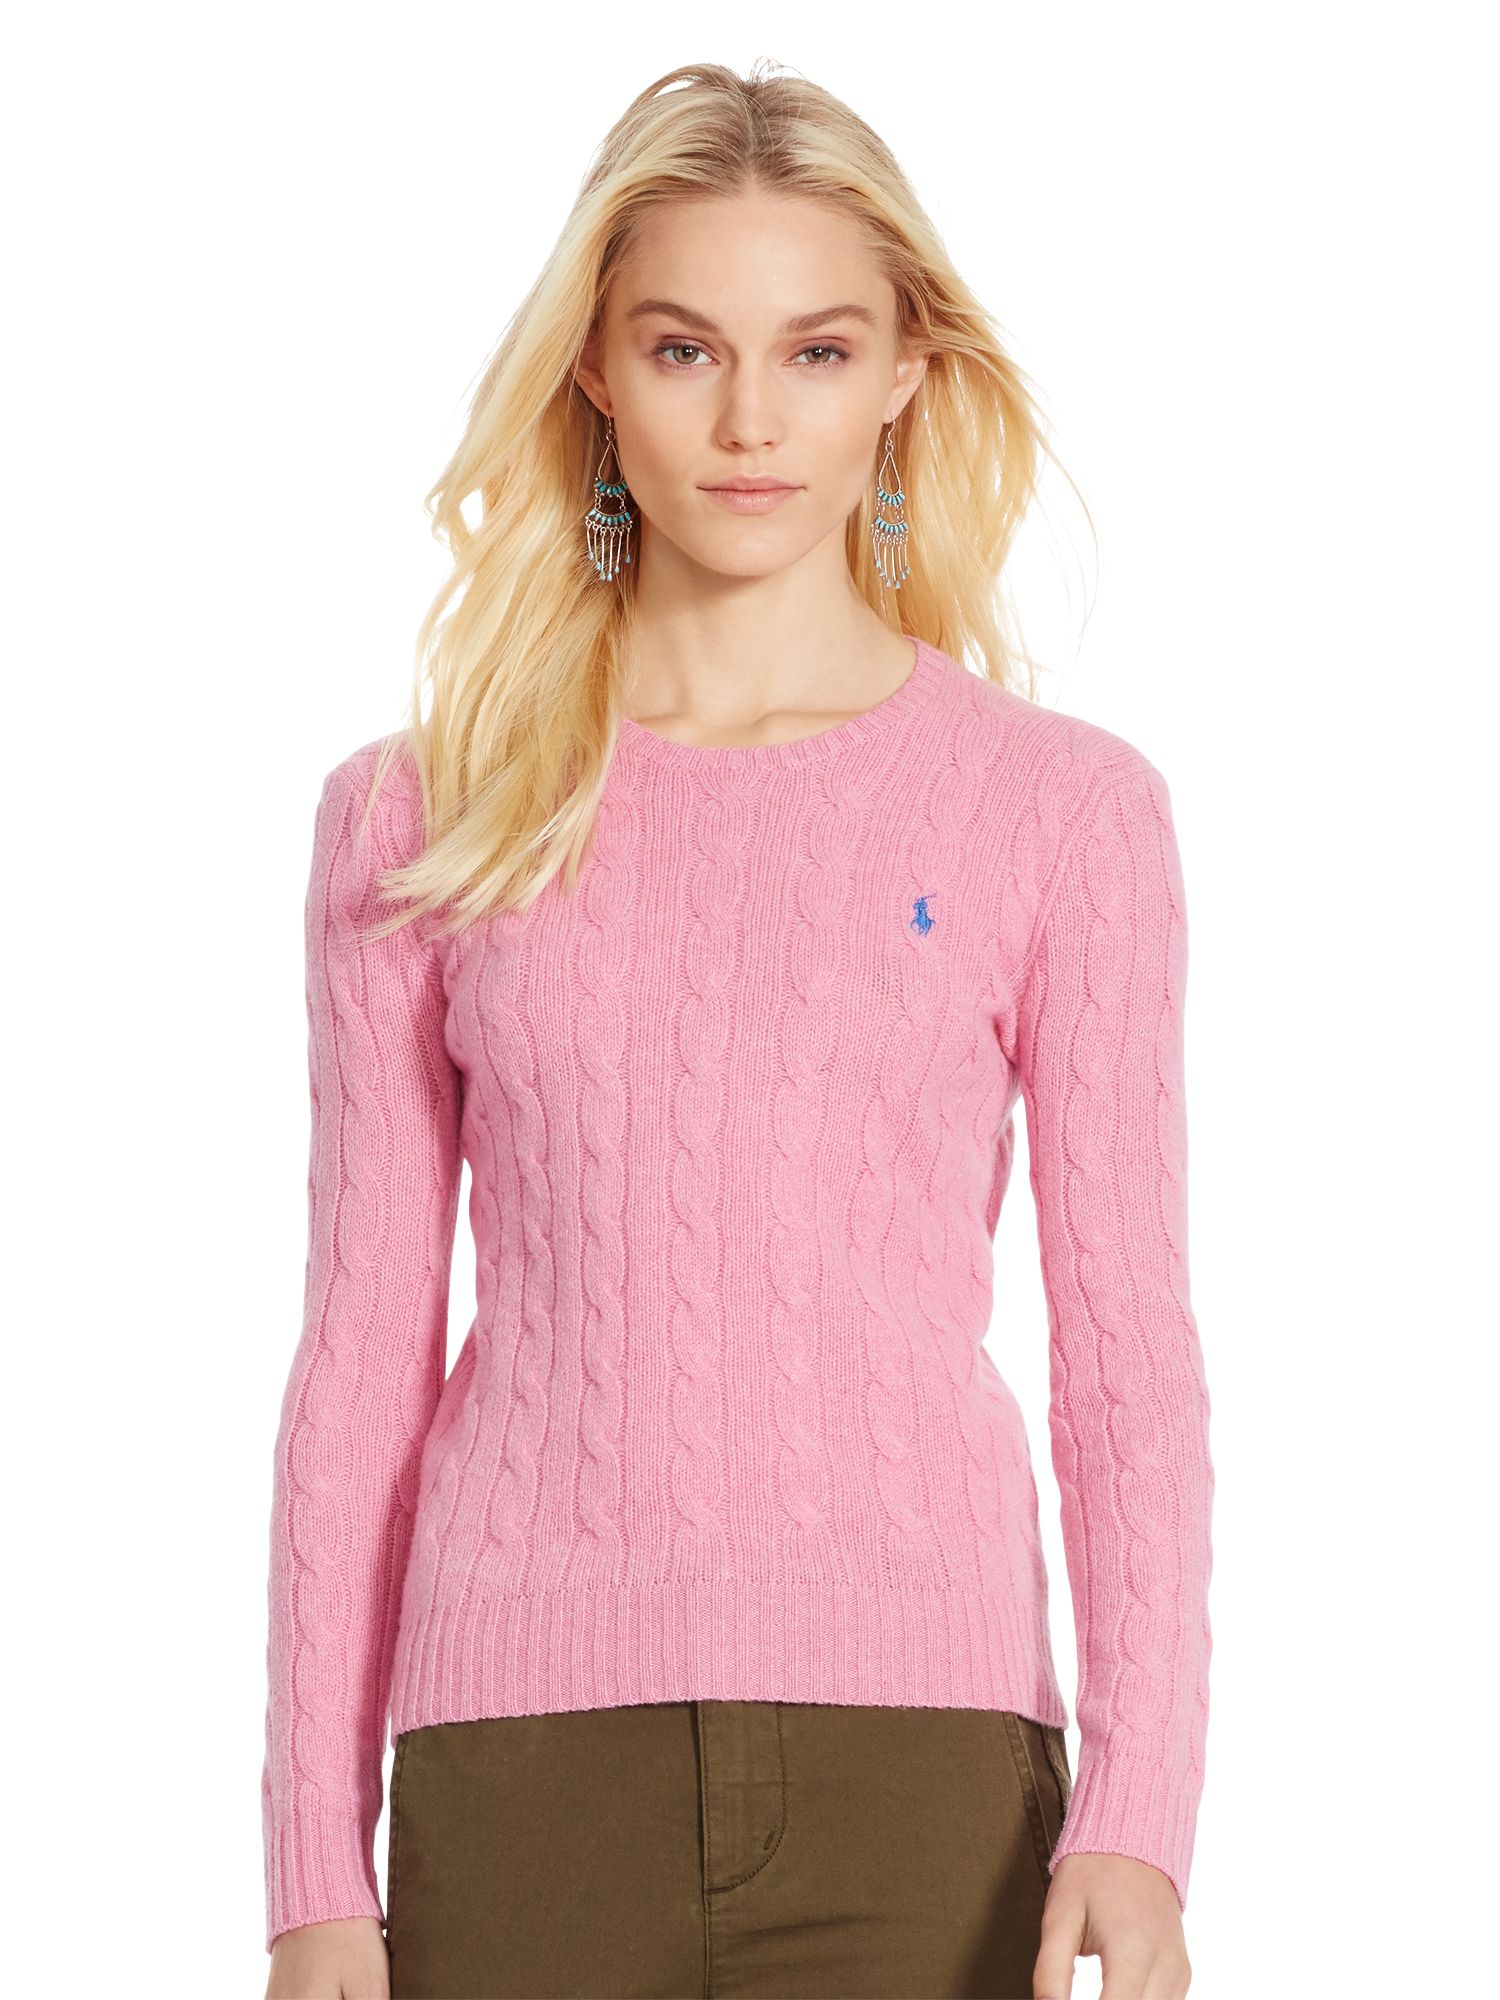 pink ralph lauren sweater